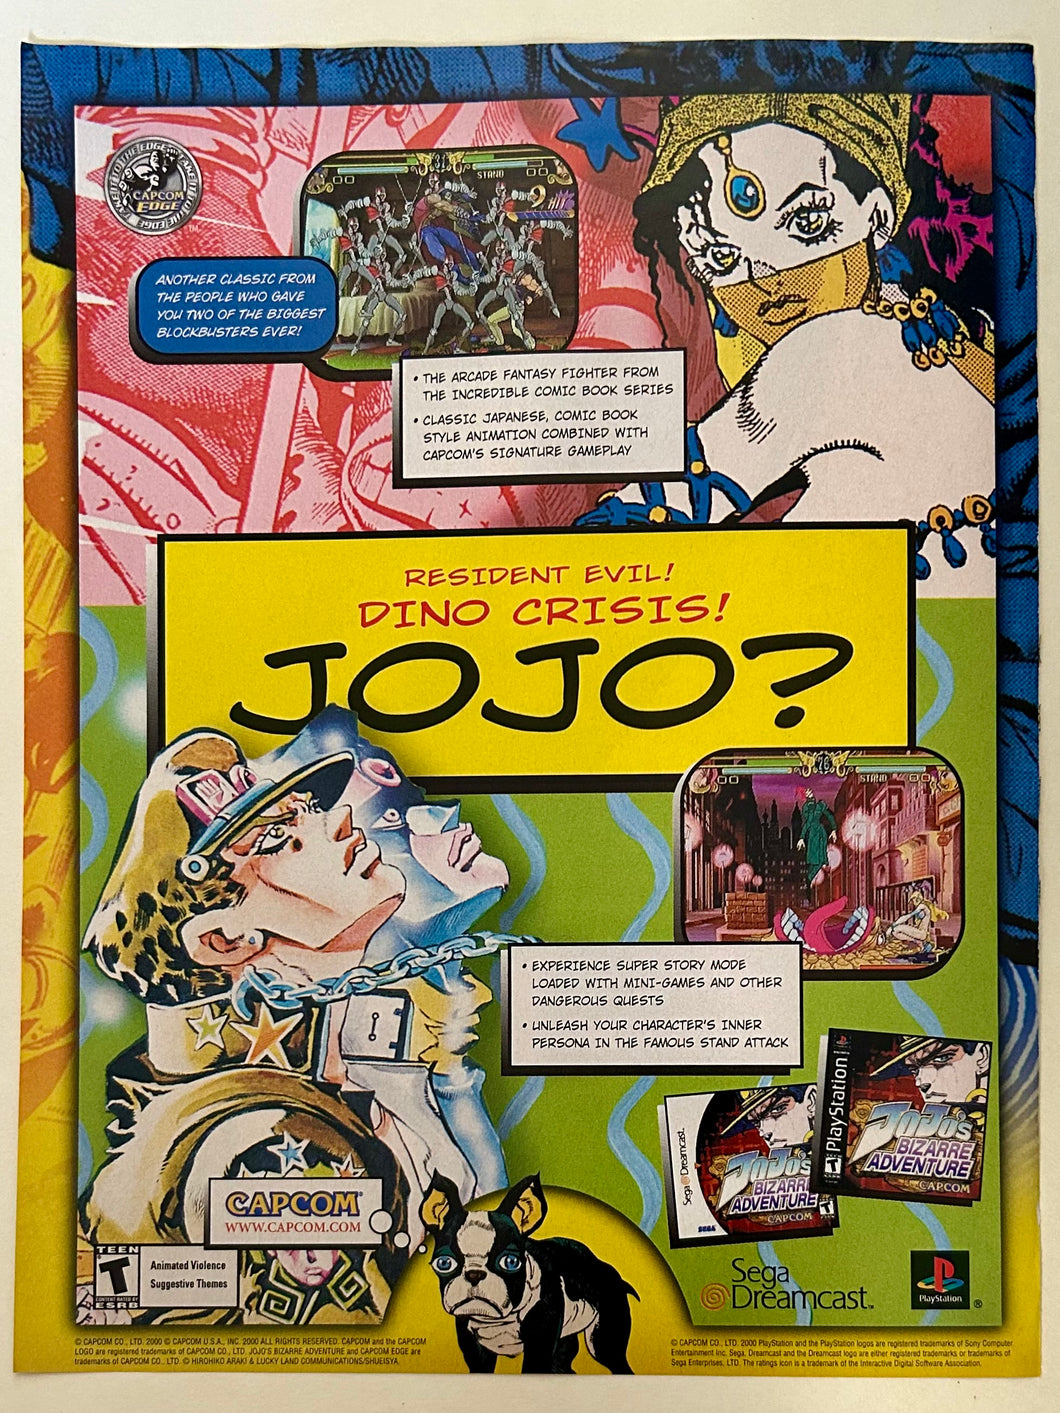 JoJo's Bizarre Adventure - PS1 Dreamcast - Original Vintage Advertisement - Print Ads - Laminated A4 Poster